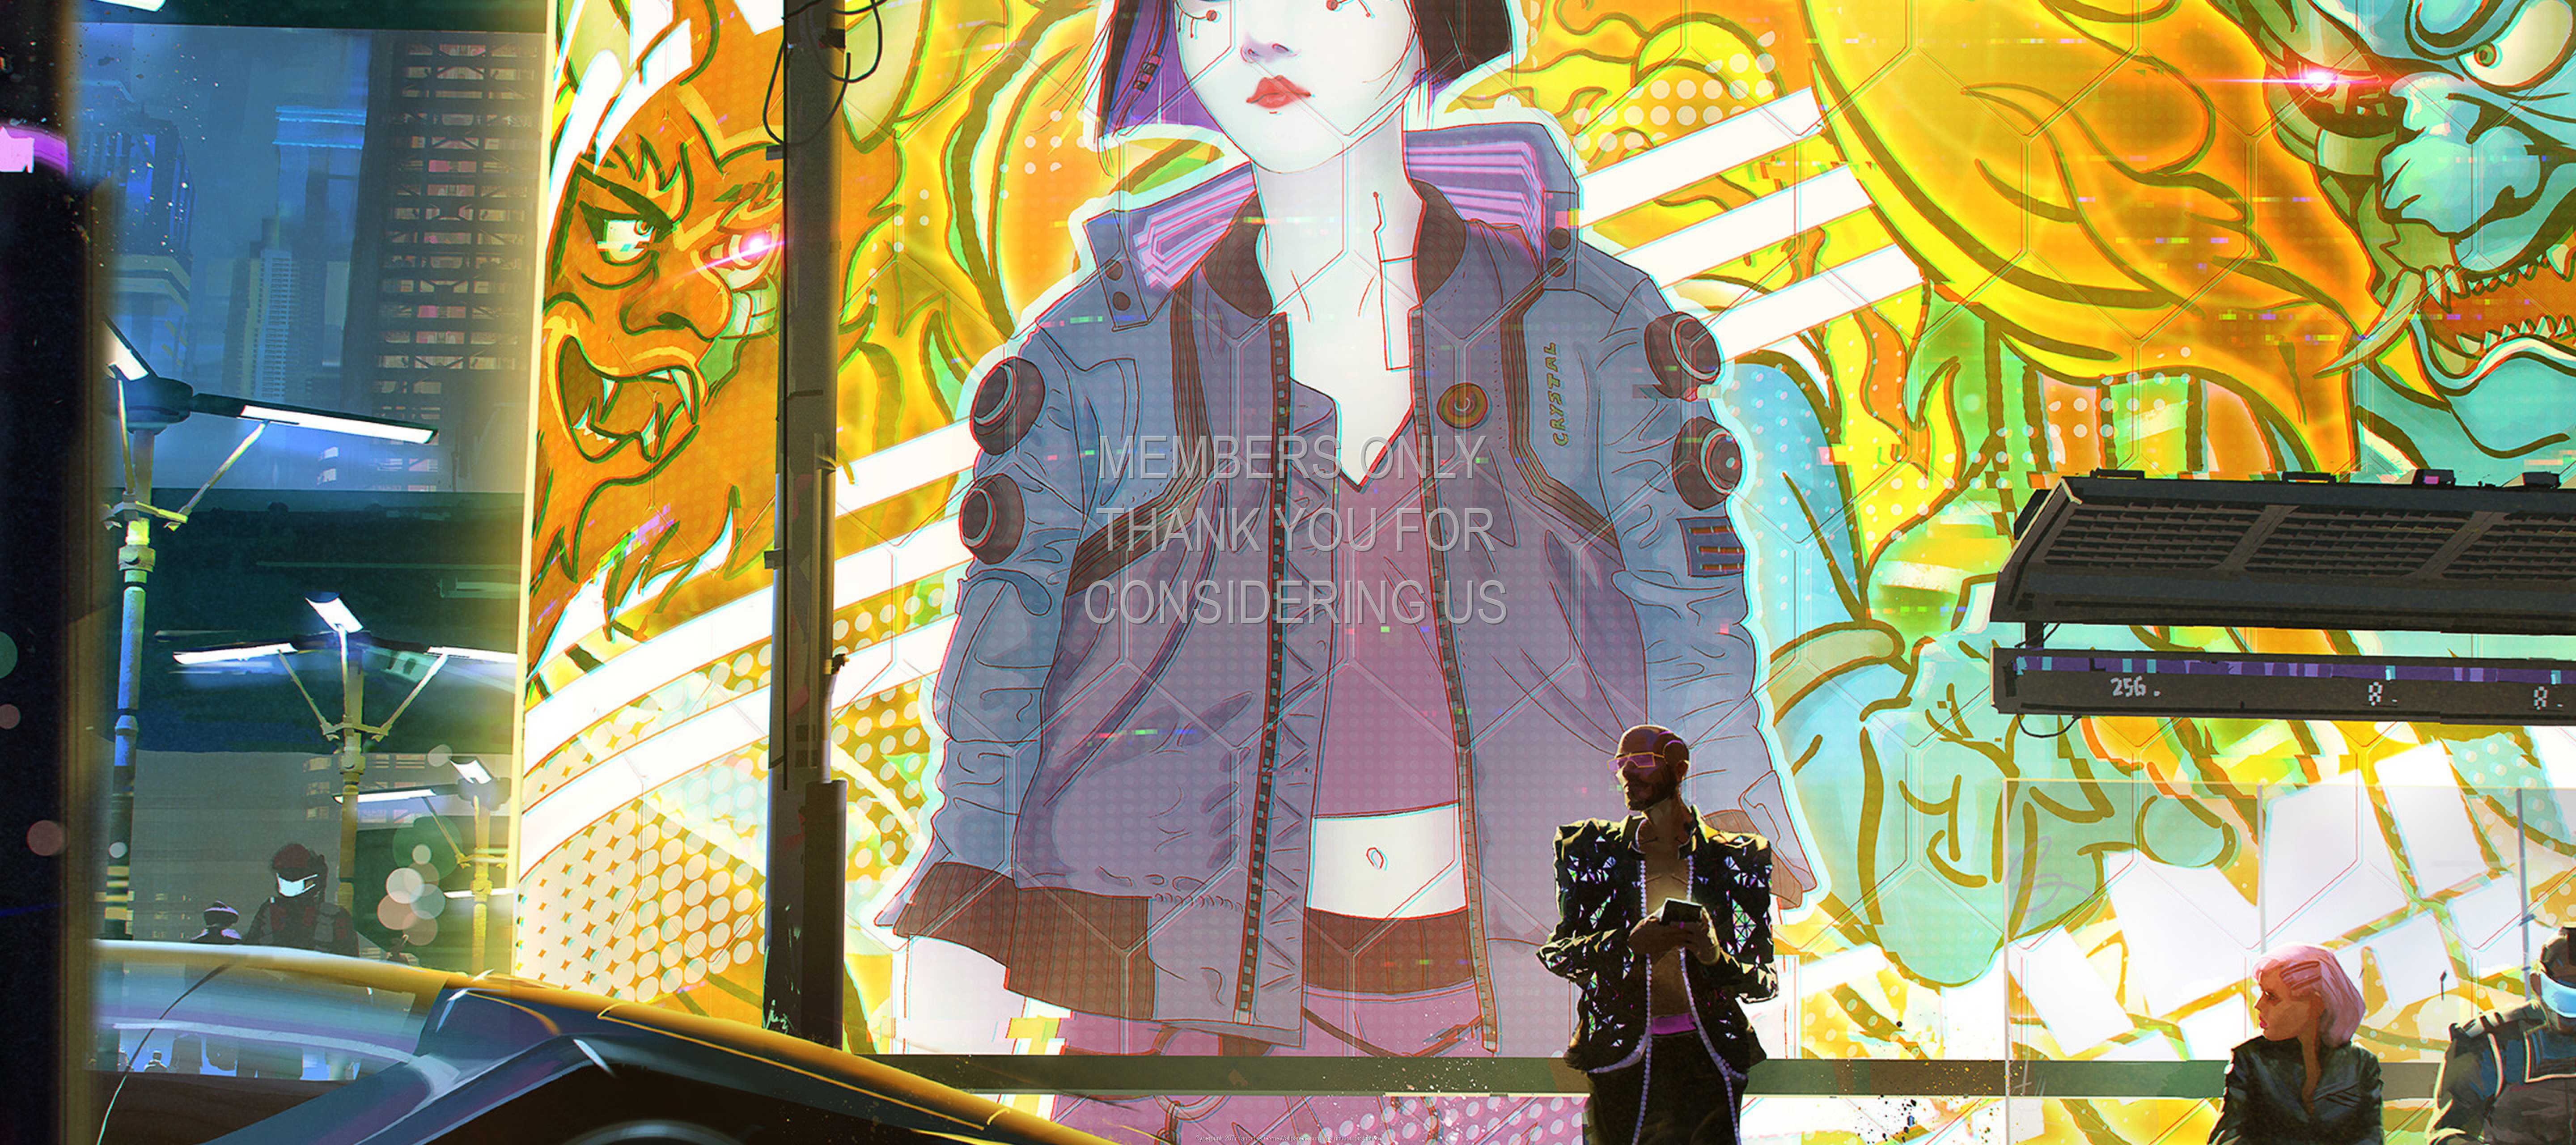 Cyberpunk 2077 fan art 1440p%20Horizontal Mobile wallpaper or background 05